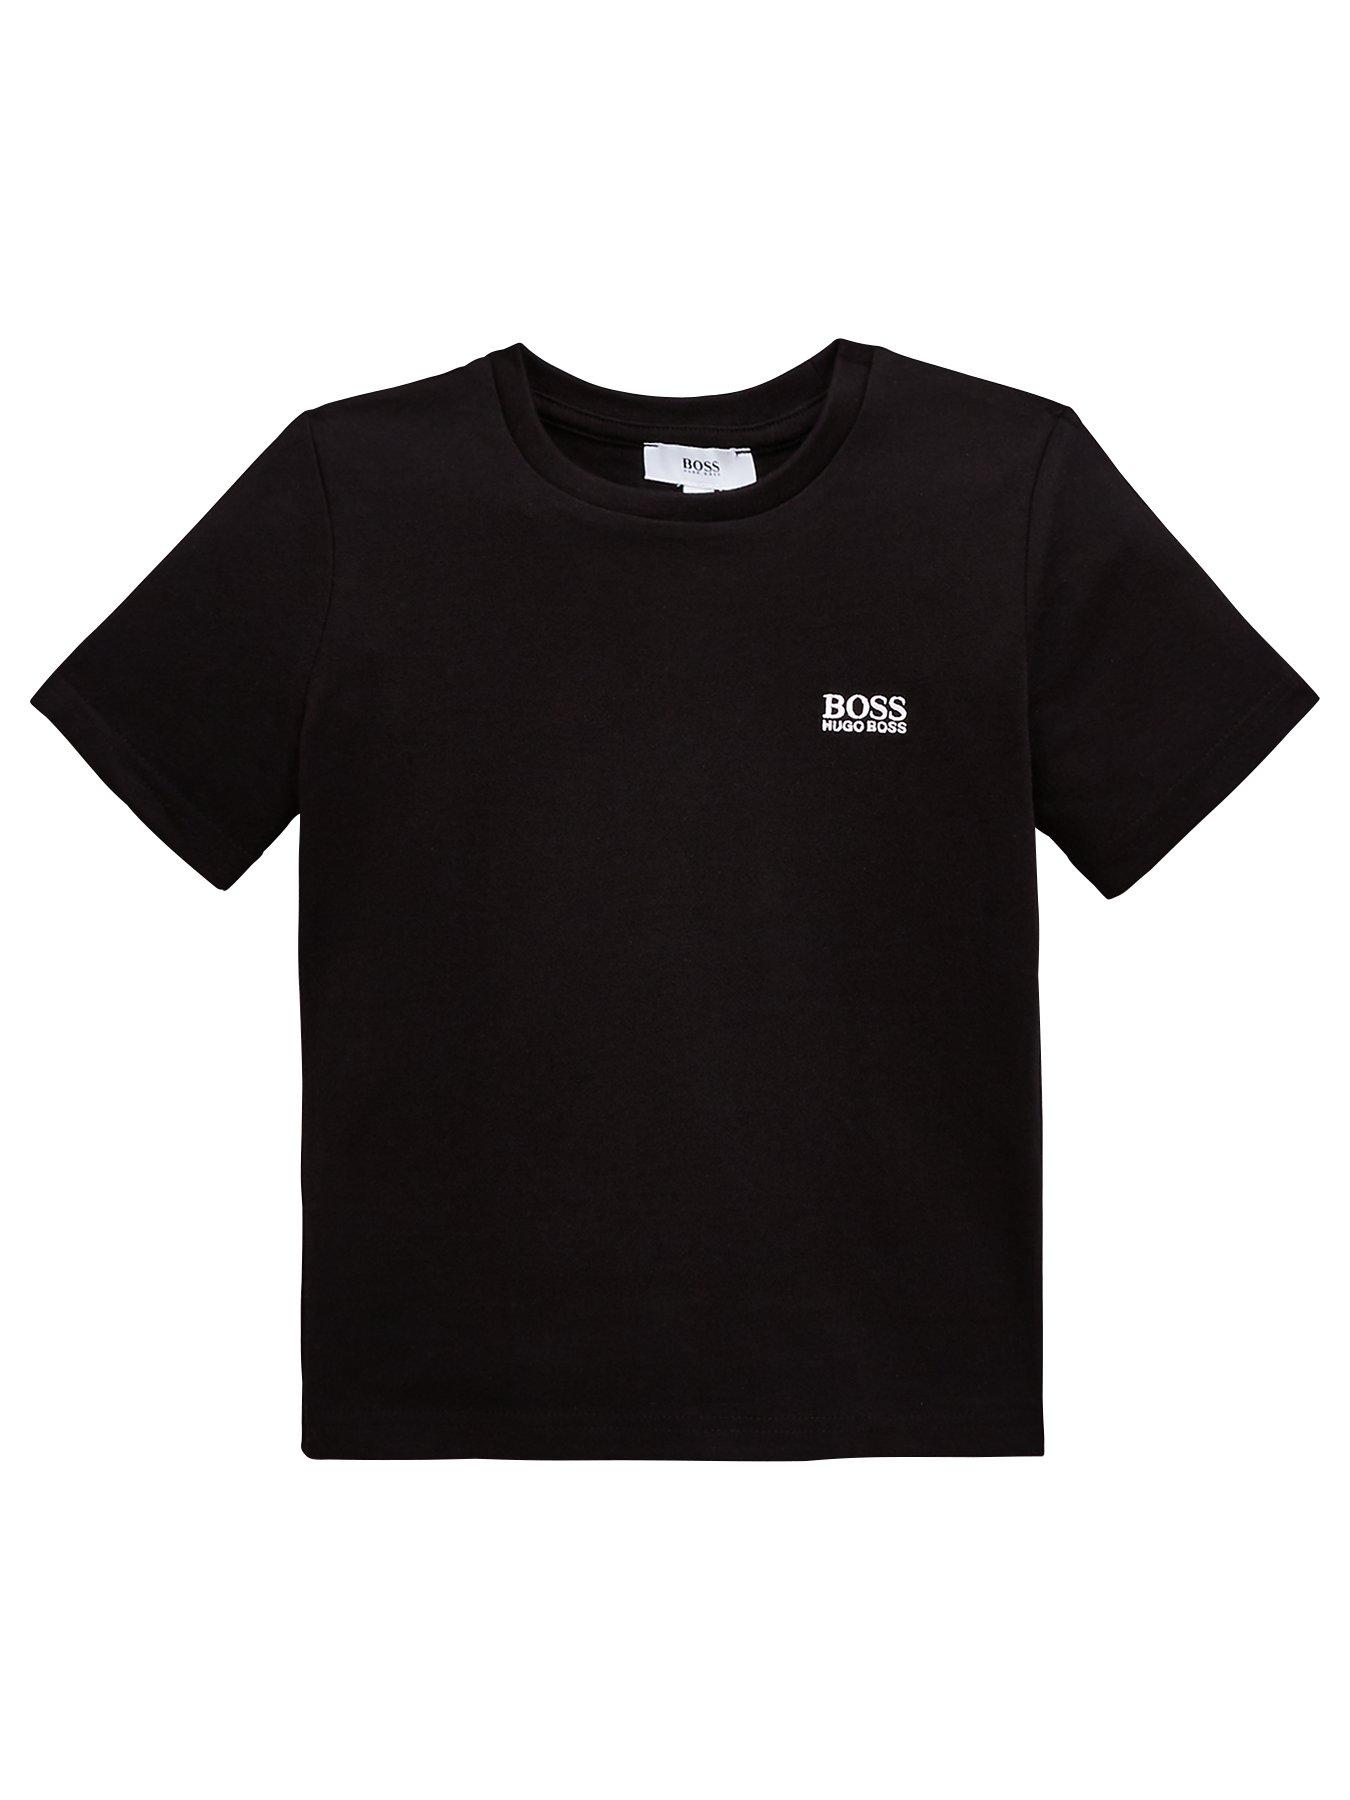 HUGO BOSS Baby Kombination T-Shirt und Shorts mit Logo Details 3-18 Monate